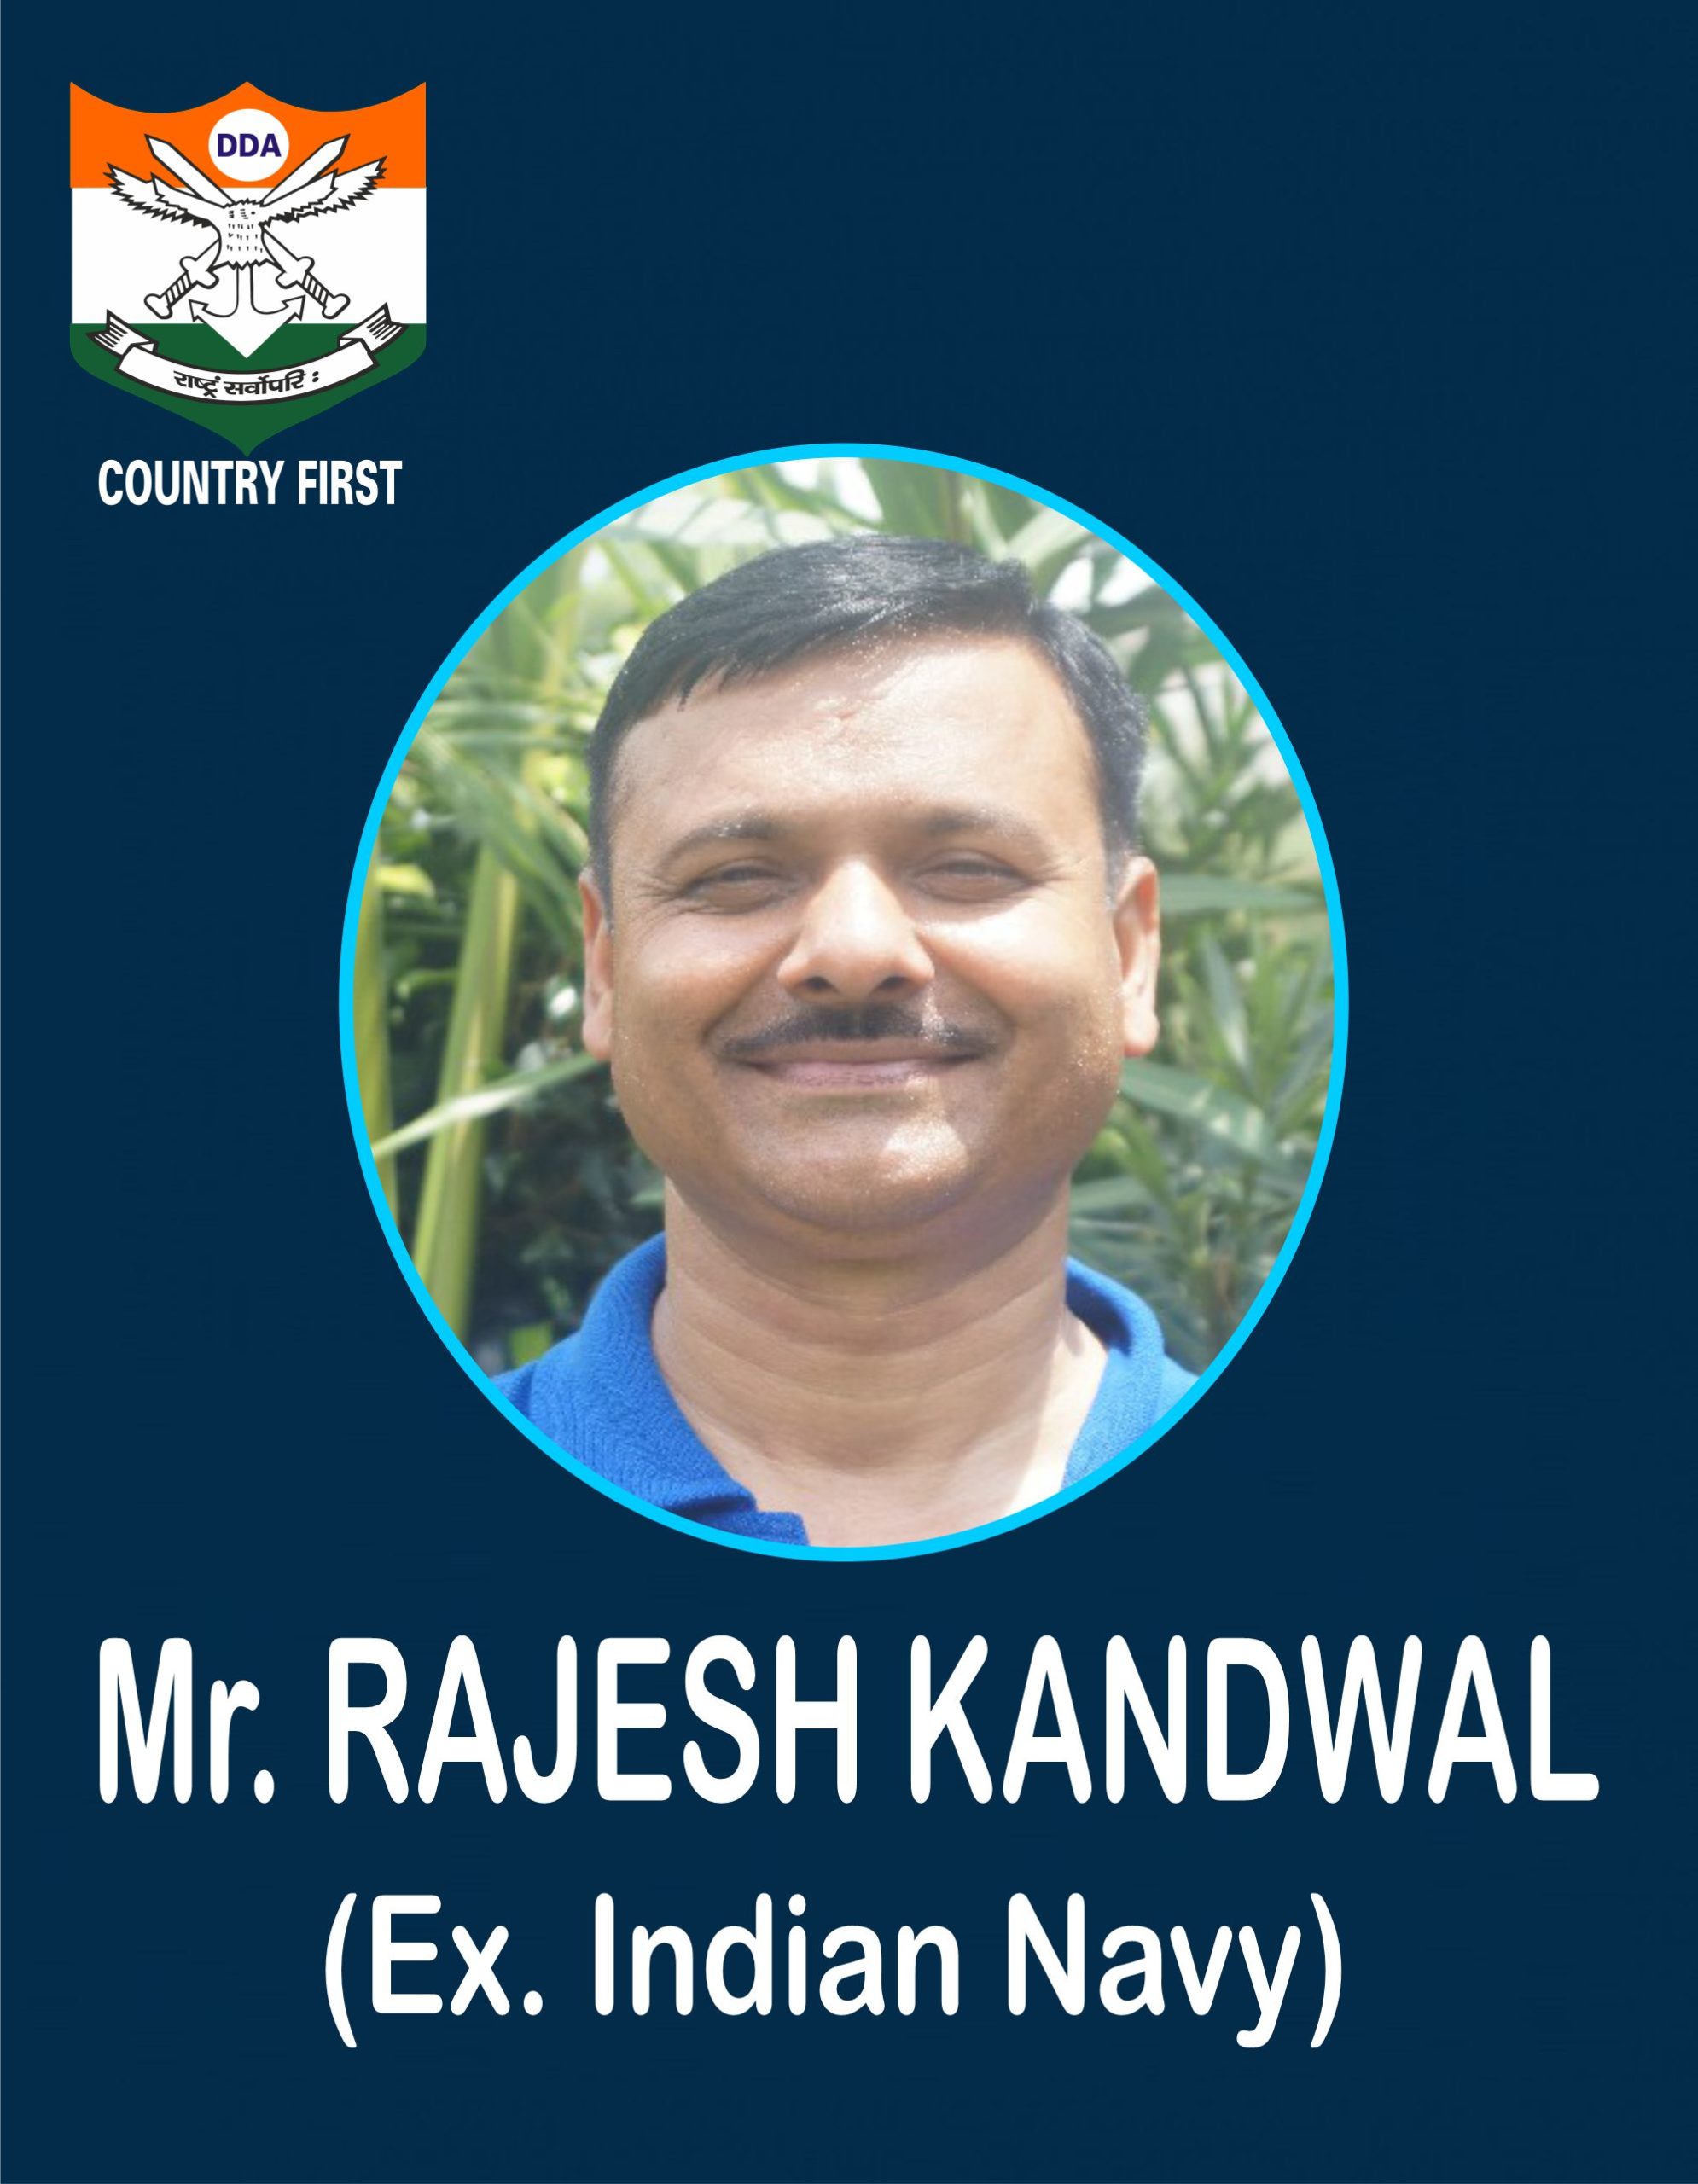 Mr. Rajesh Kandwal